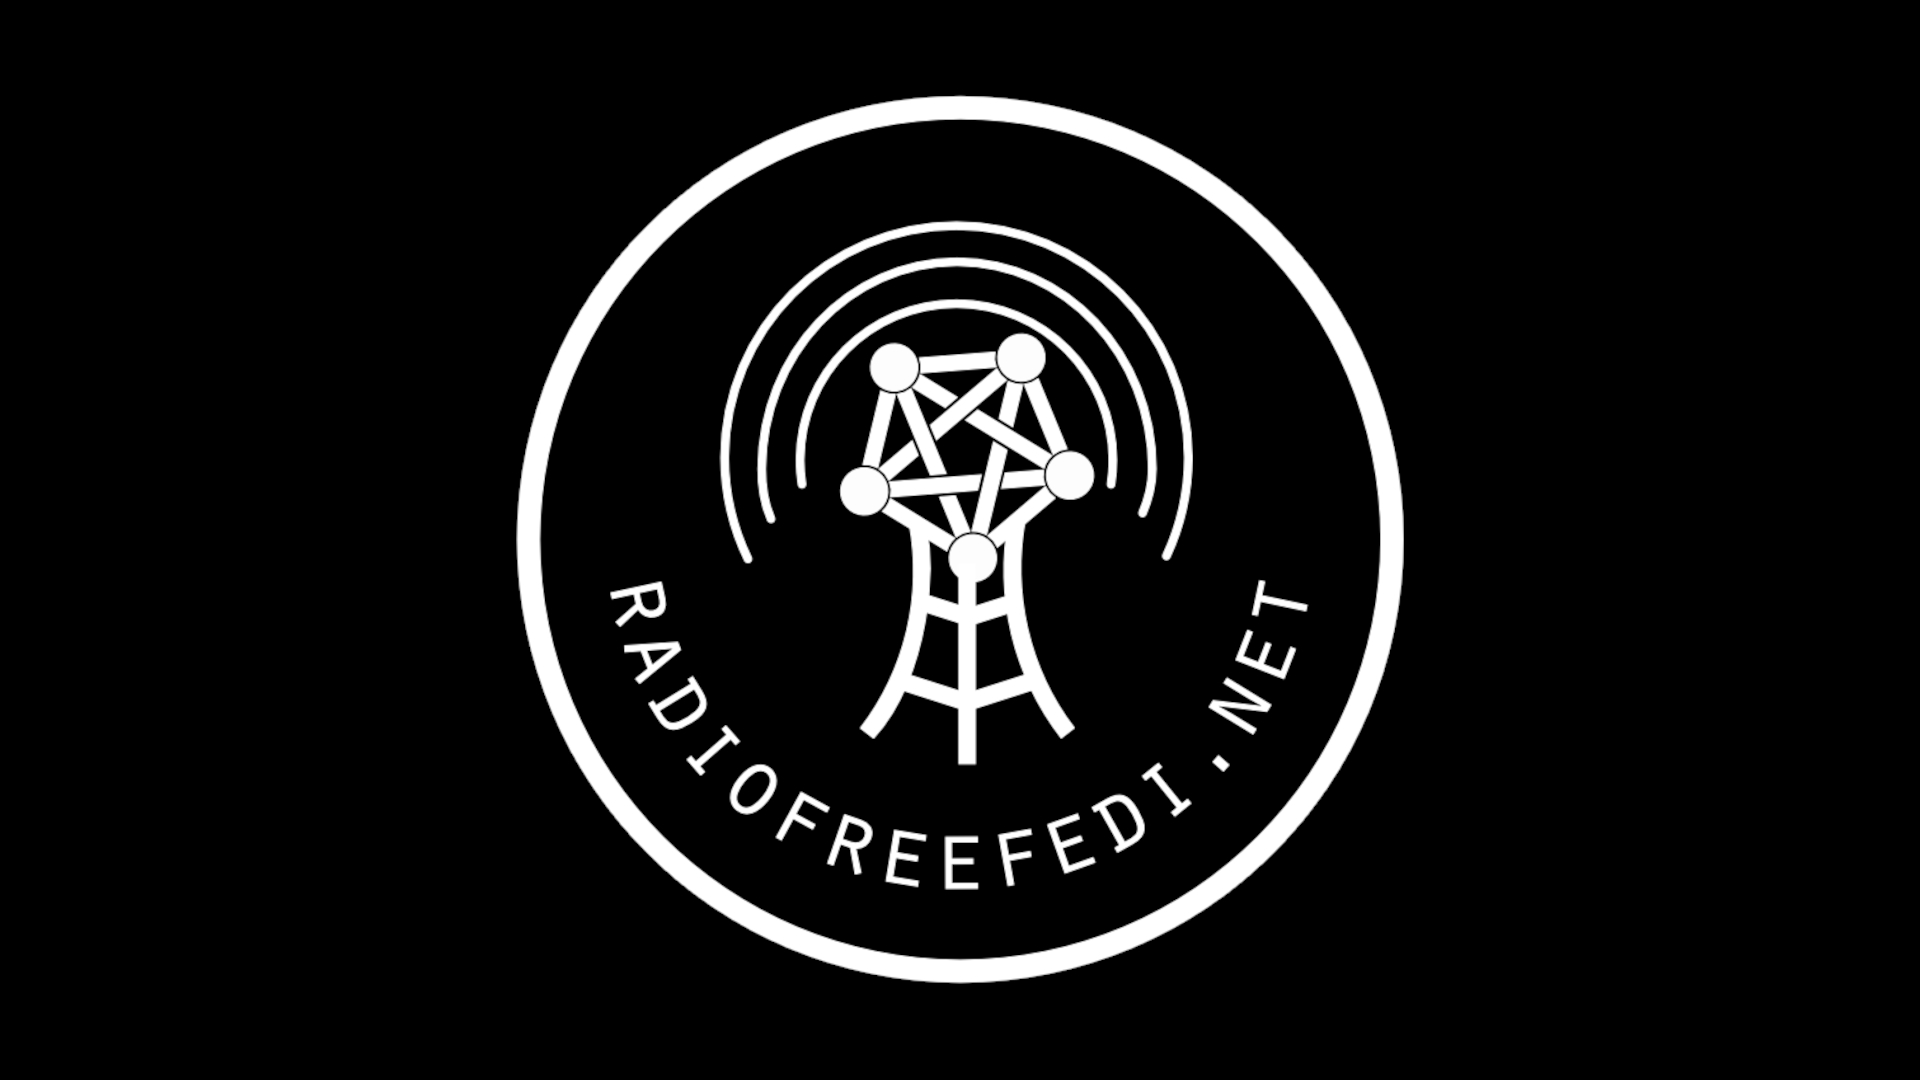 radio free fedi wallpaper 1080p black background with tower logo